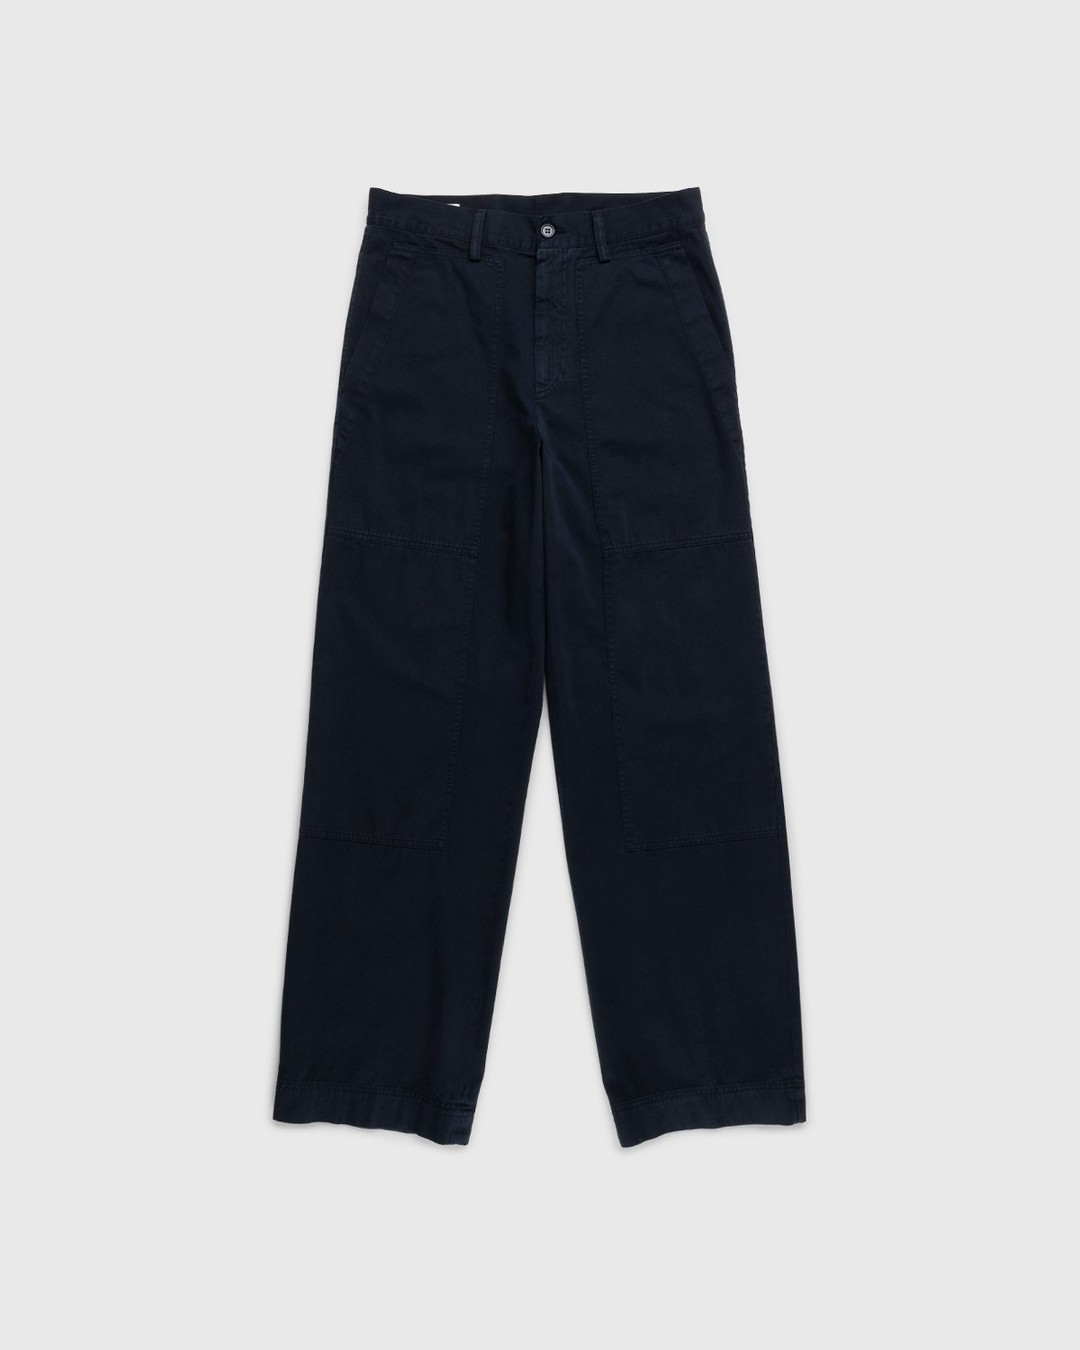 Dries van Noten – Pilson Pants Navy - Pants - Blue - Image 1